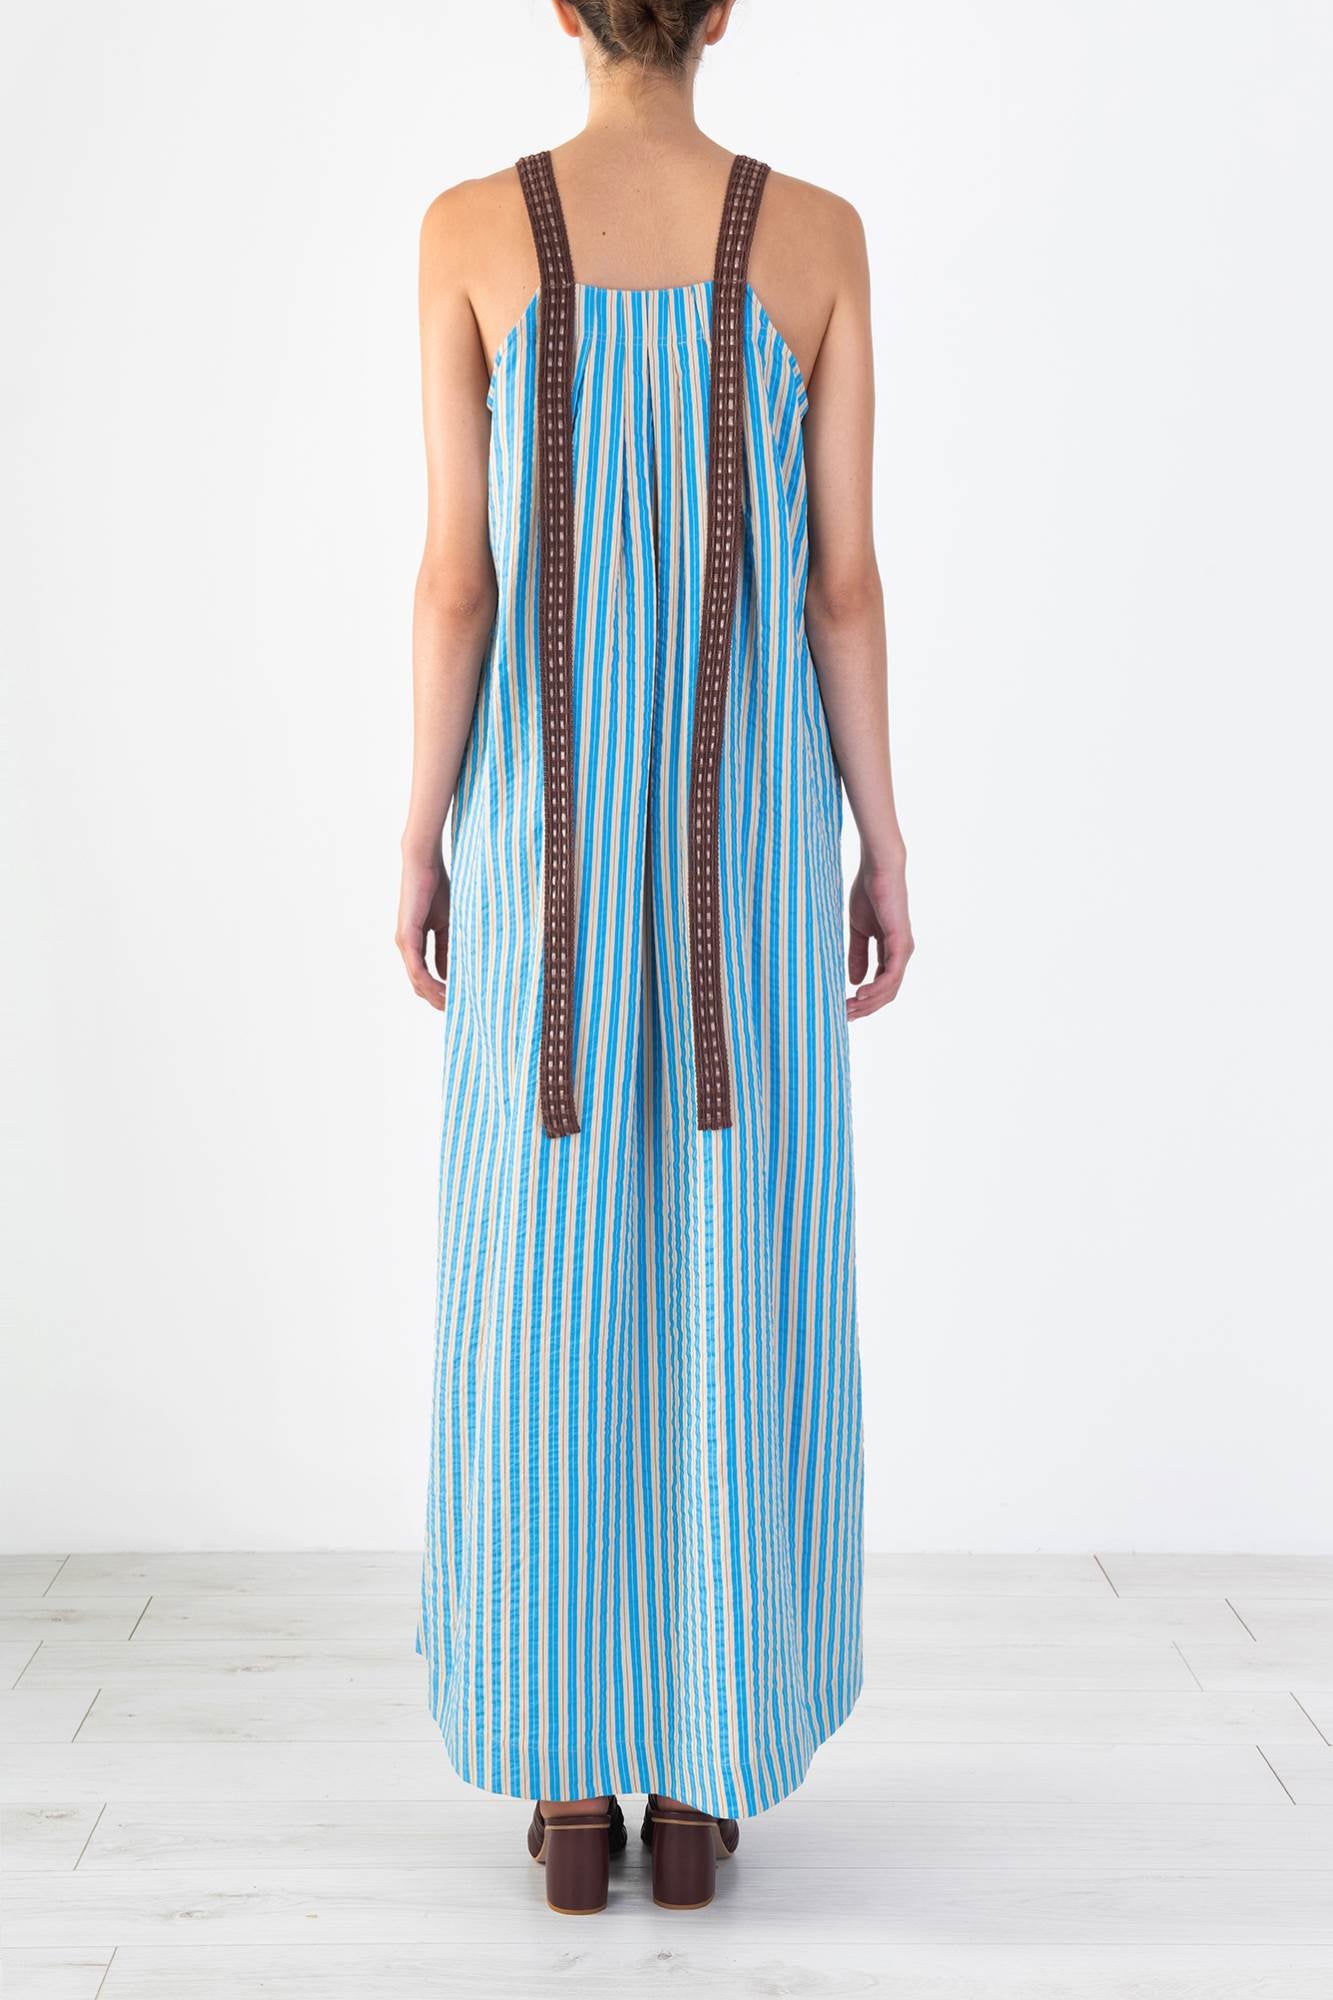 Long “Pencil Stripes” dress